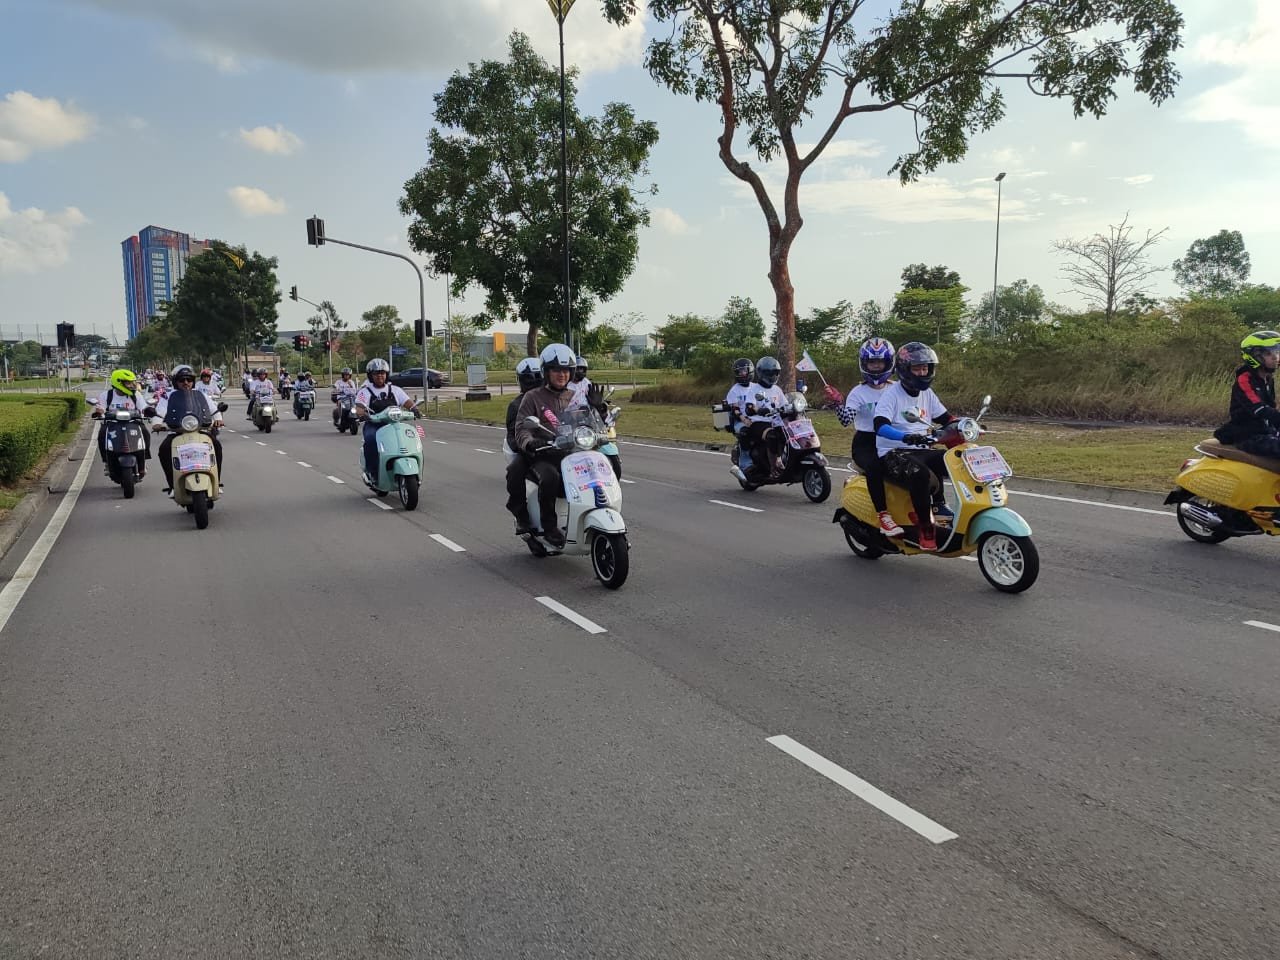  Sesi konvoi kedua menghala ke Motoplex Johor Bahru